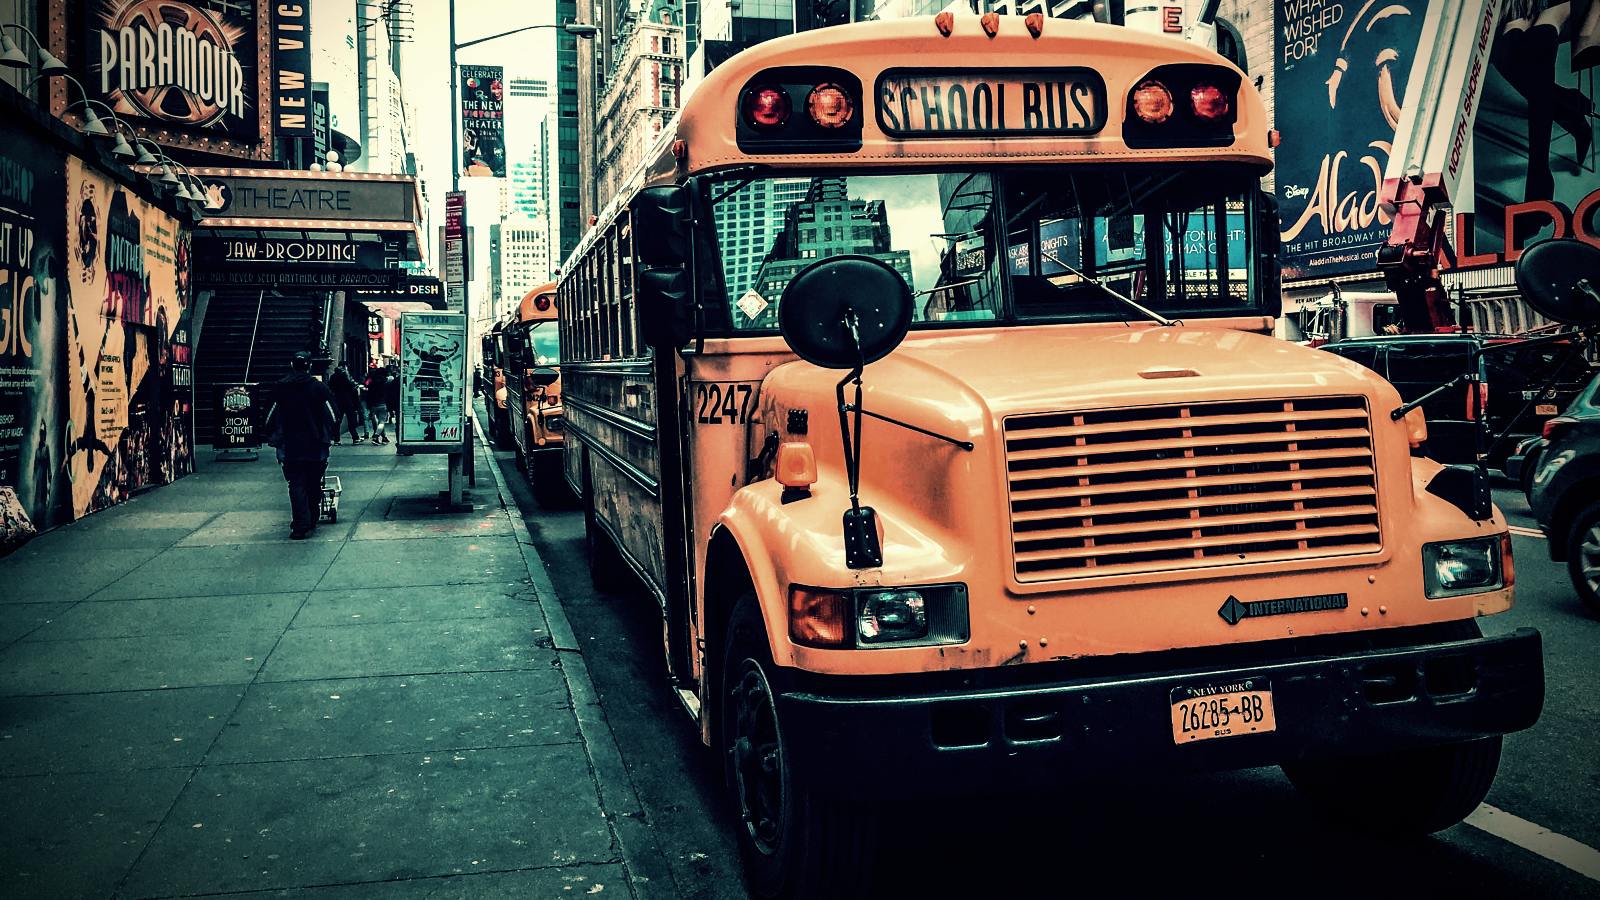 New York City school buss